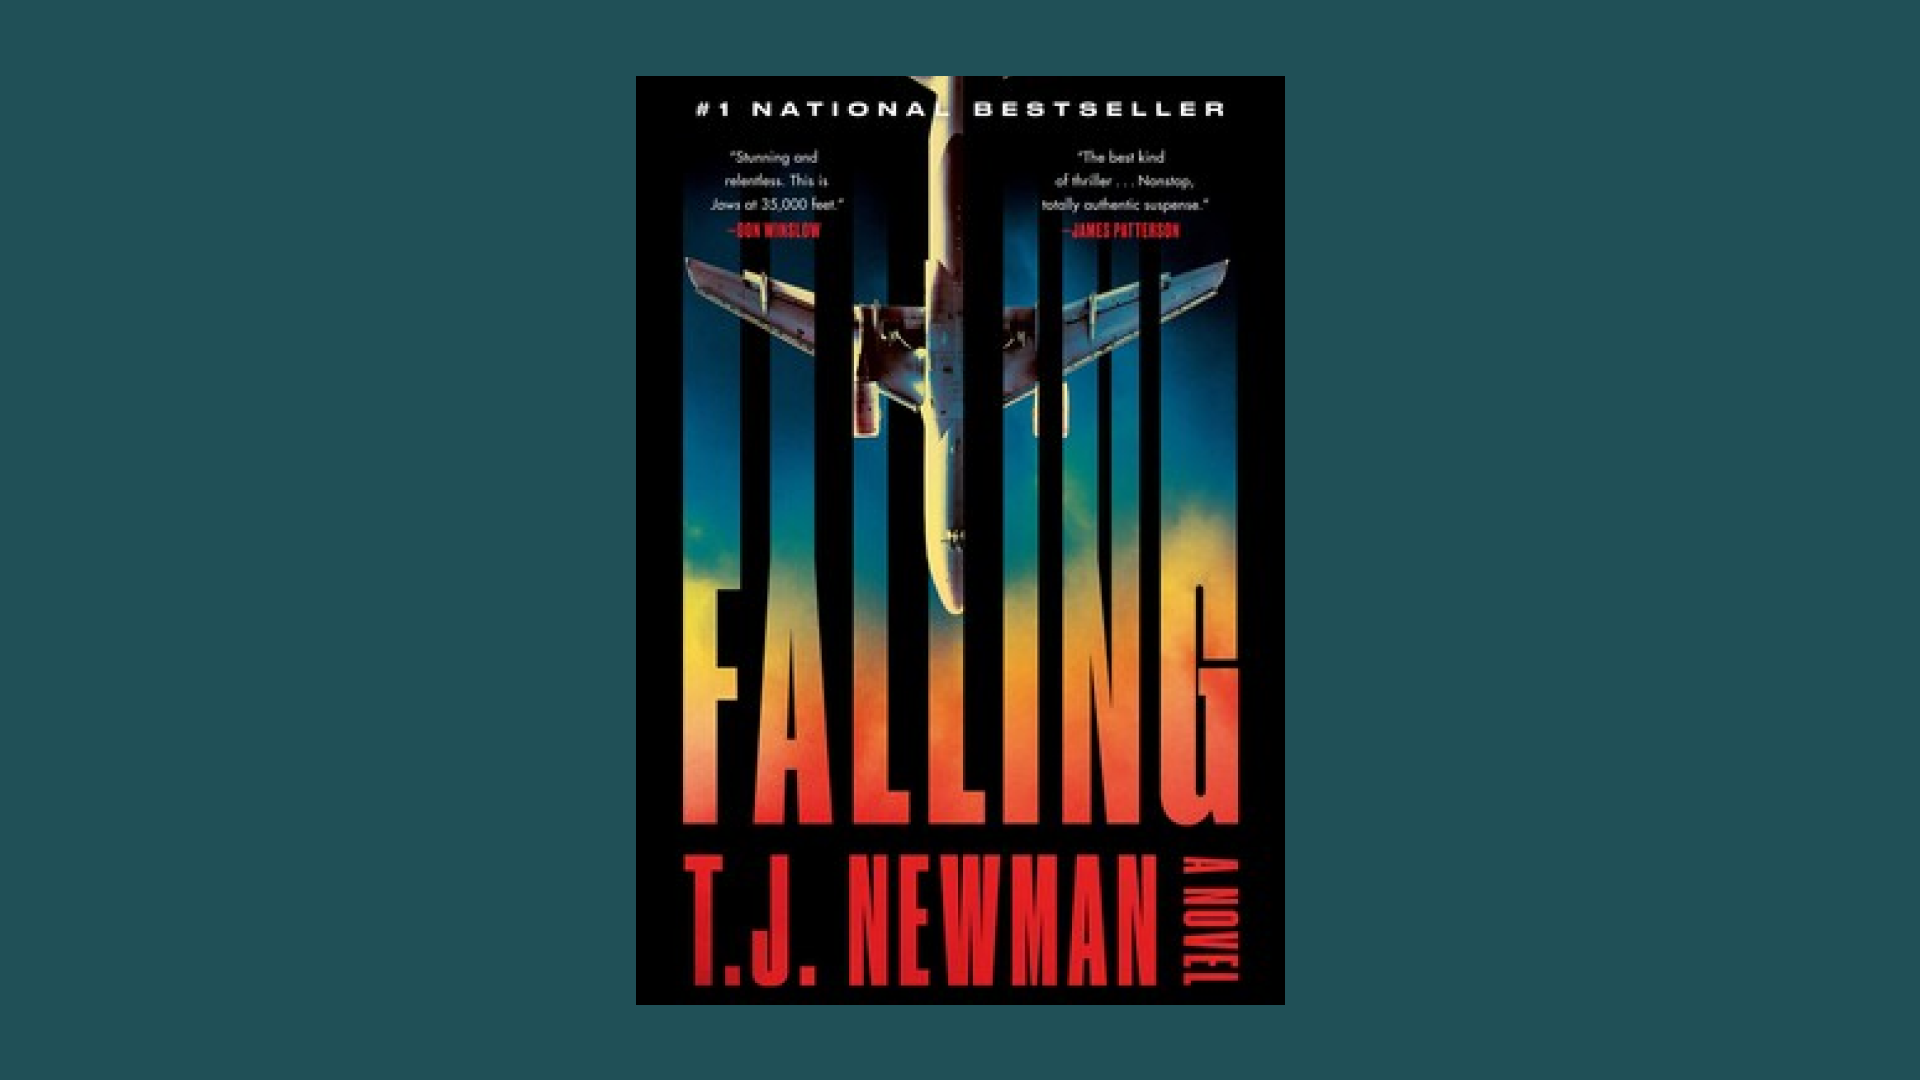 “Falling” by T.J. Newman 